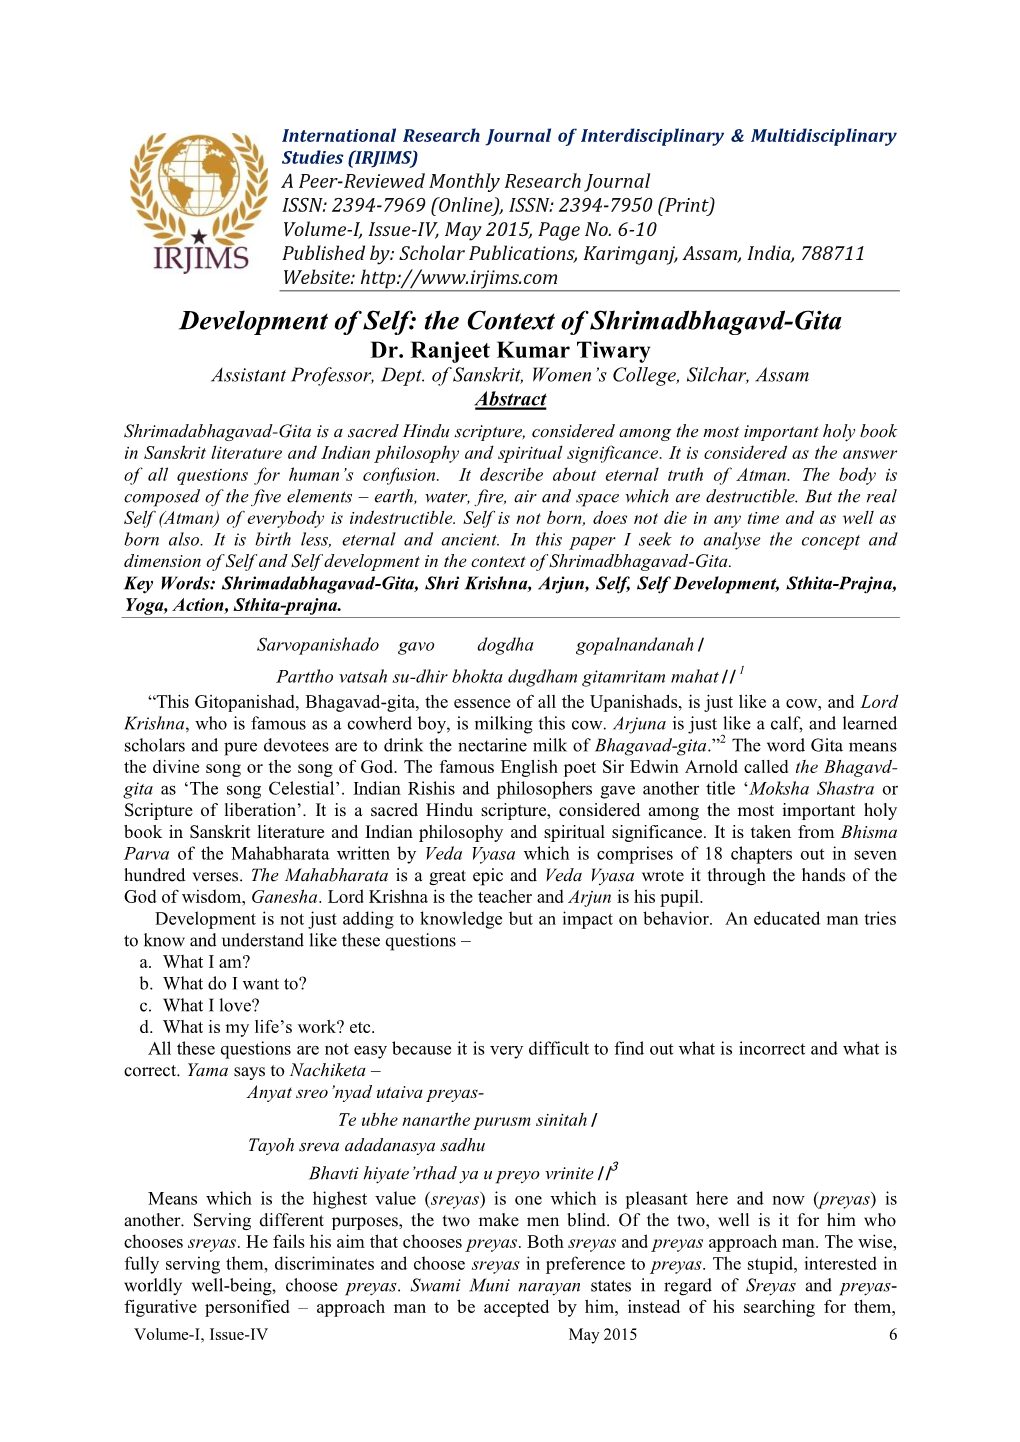 Development of Self: the Context of Shrimadbhagavd-Gita Dr